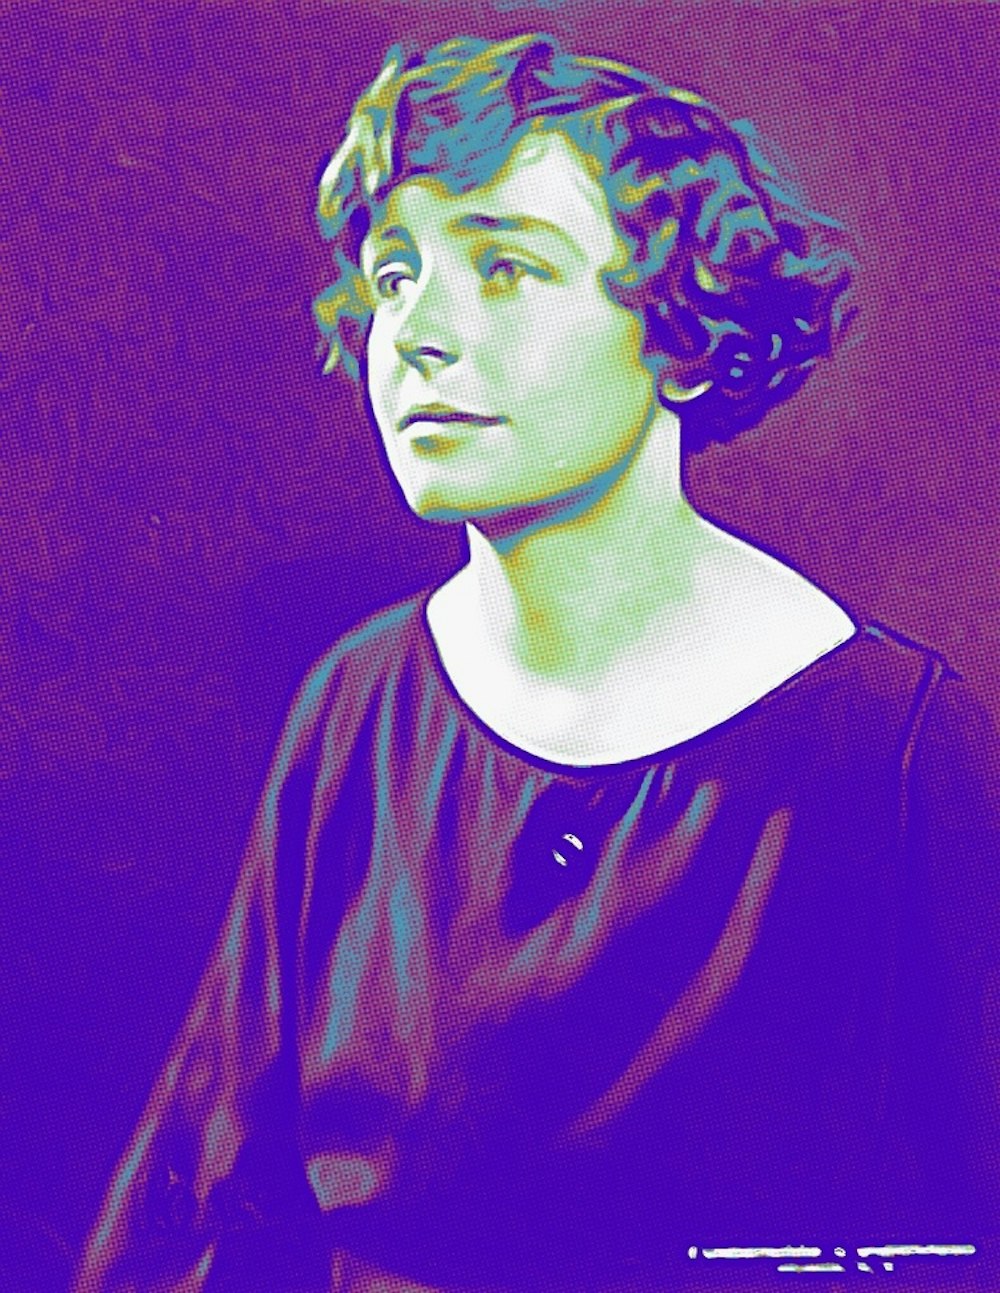 OTD: Muriel MacSwiney (Jun 8, 1892 - Oct 26, 1982)